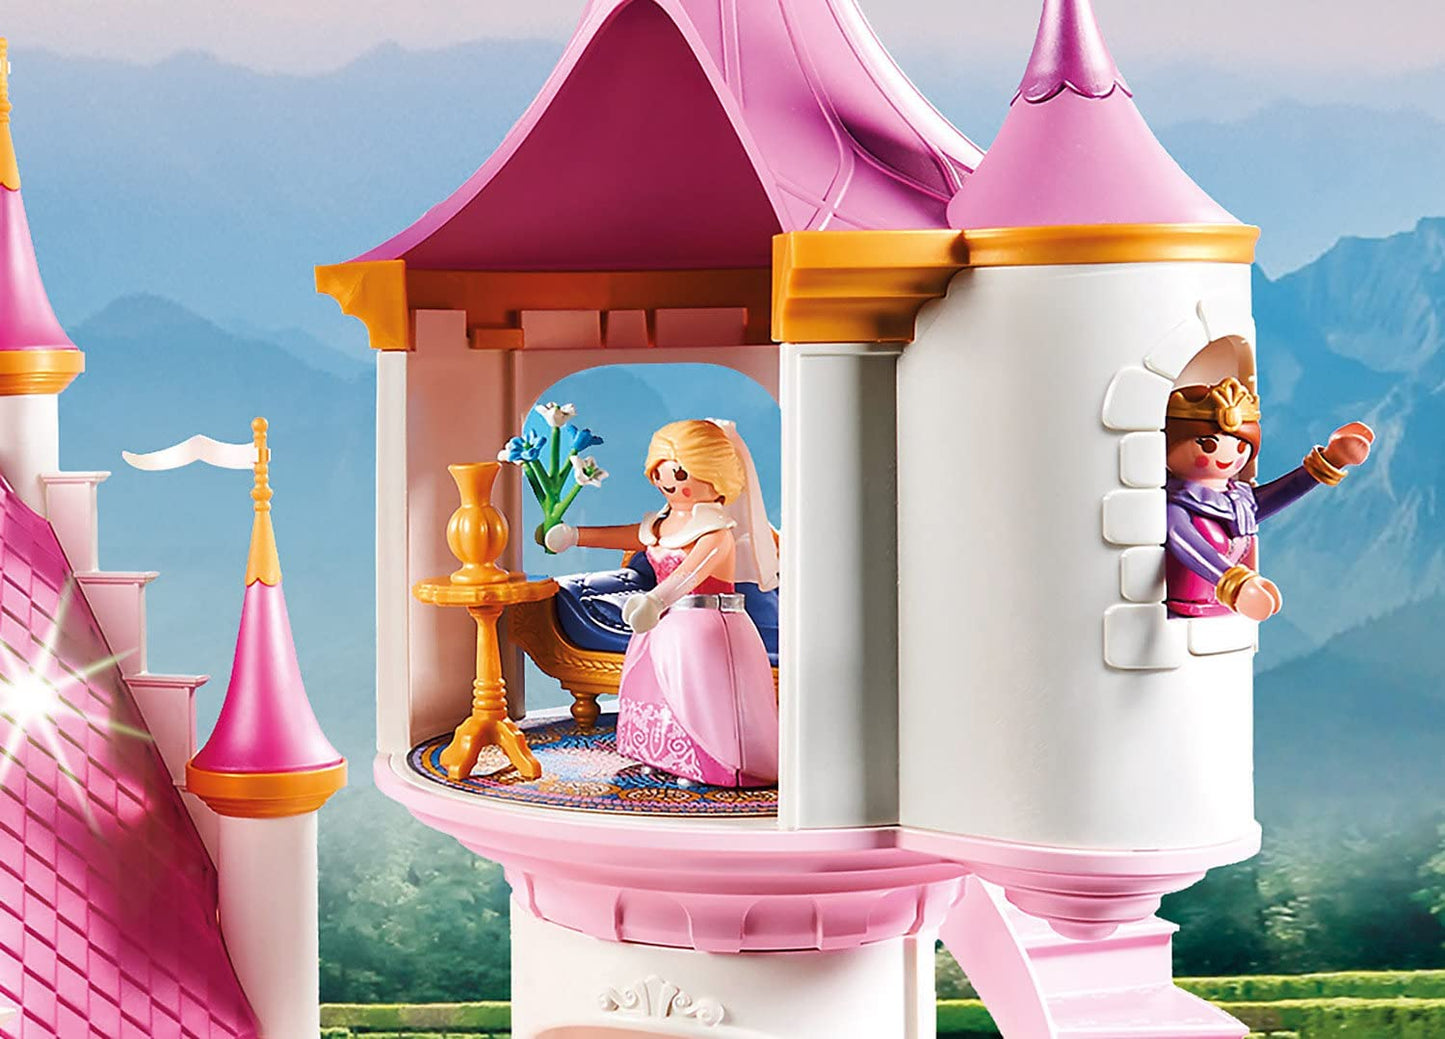 PLAYMOBIL Large Princess Castle